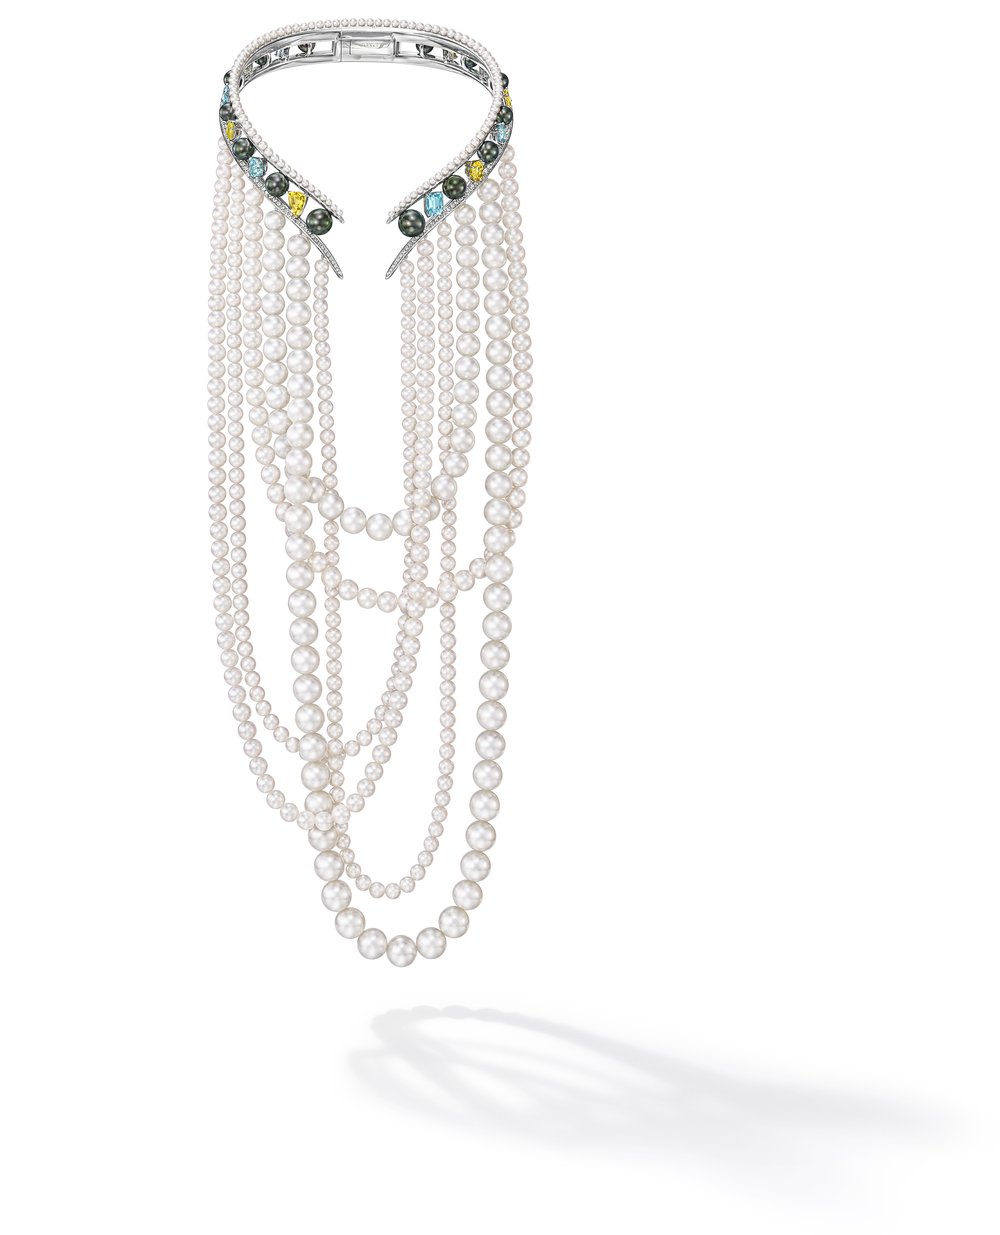 TASAKI Collier Ocean Light or blanc perles Akoya, diamants, perles des mers du Sud noires, zircons bleus, tourmalines jaunes.jpg